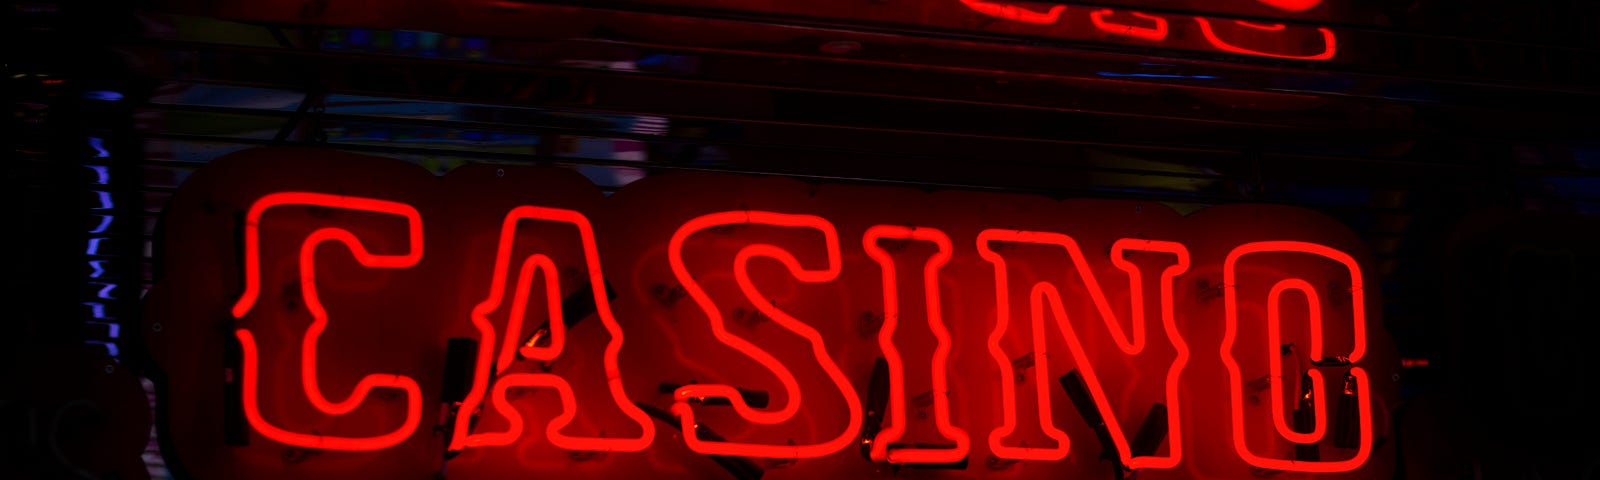 Red neon casino sign